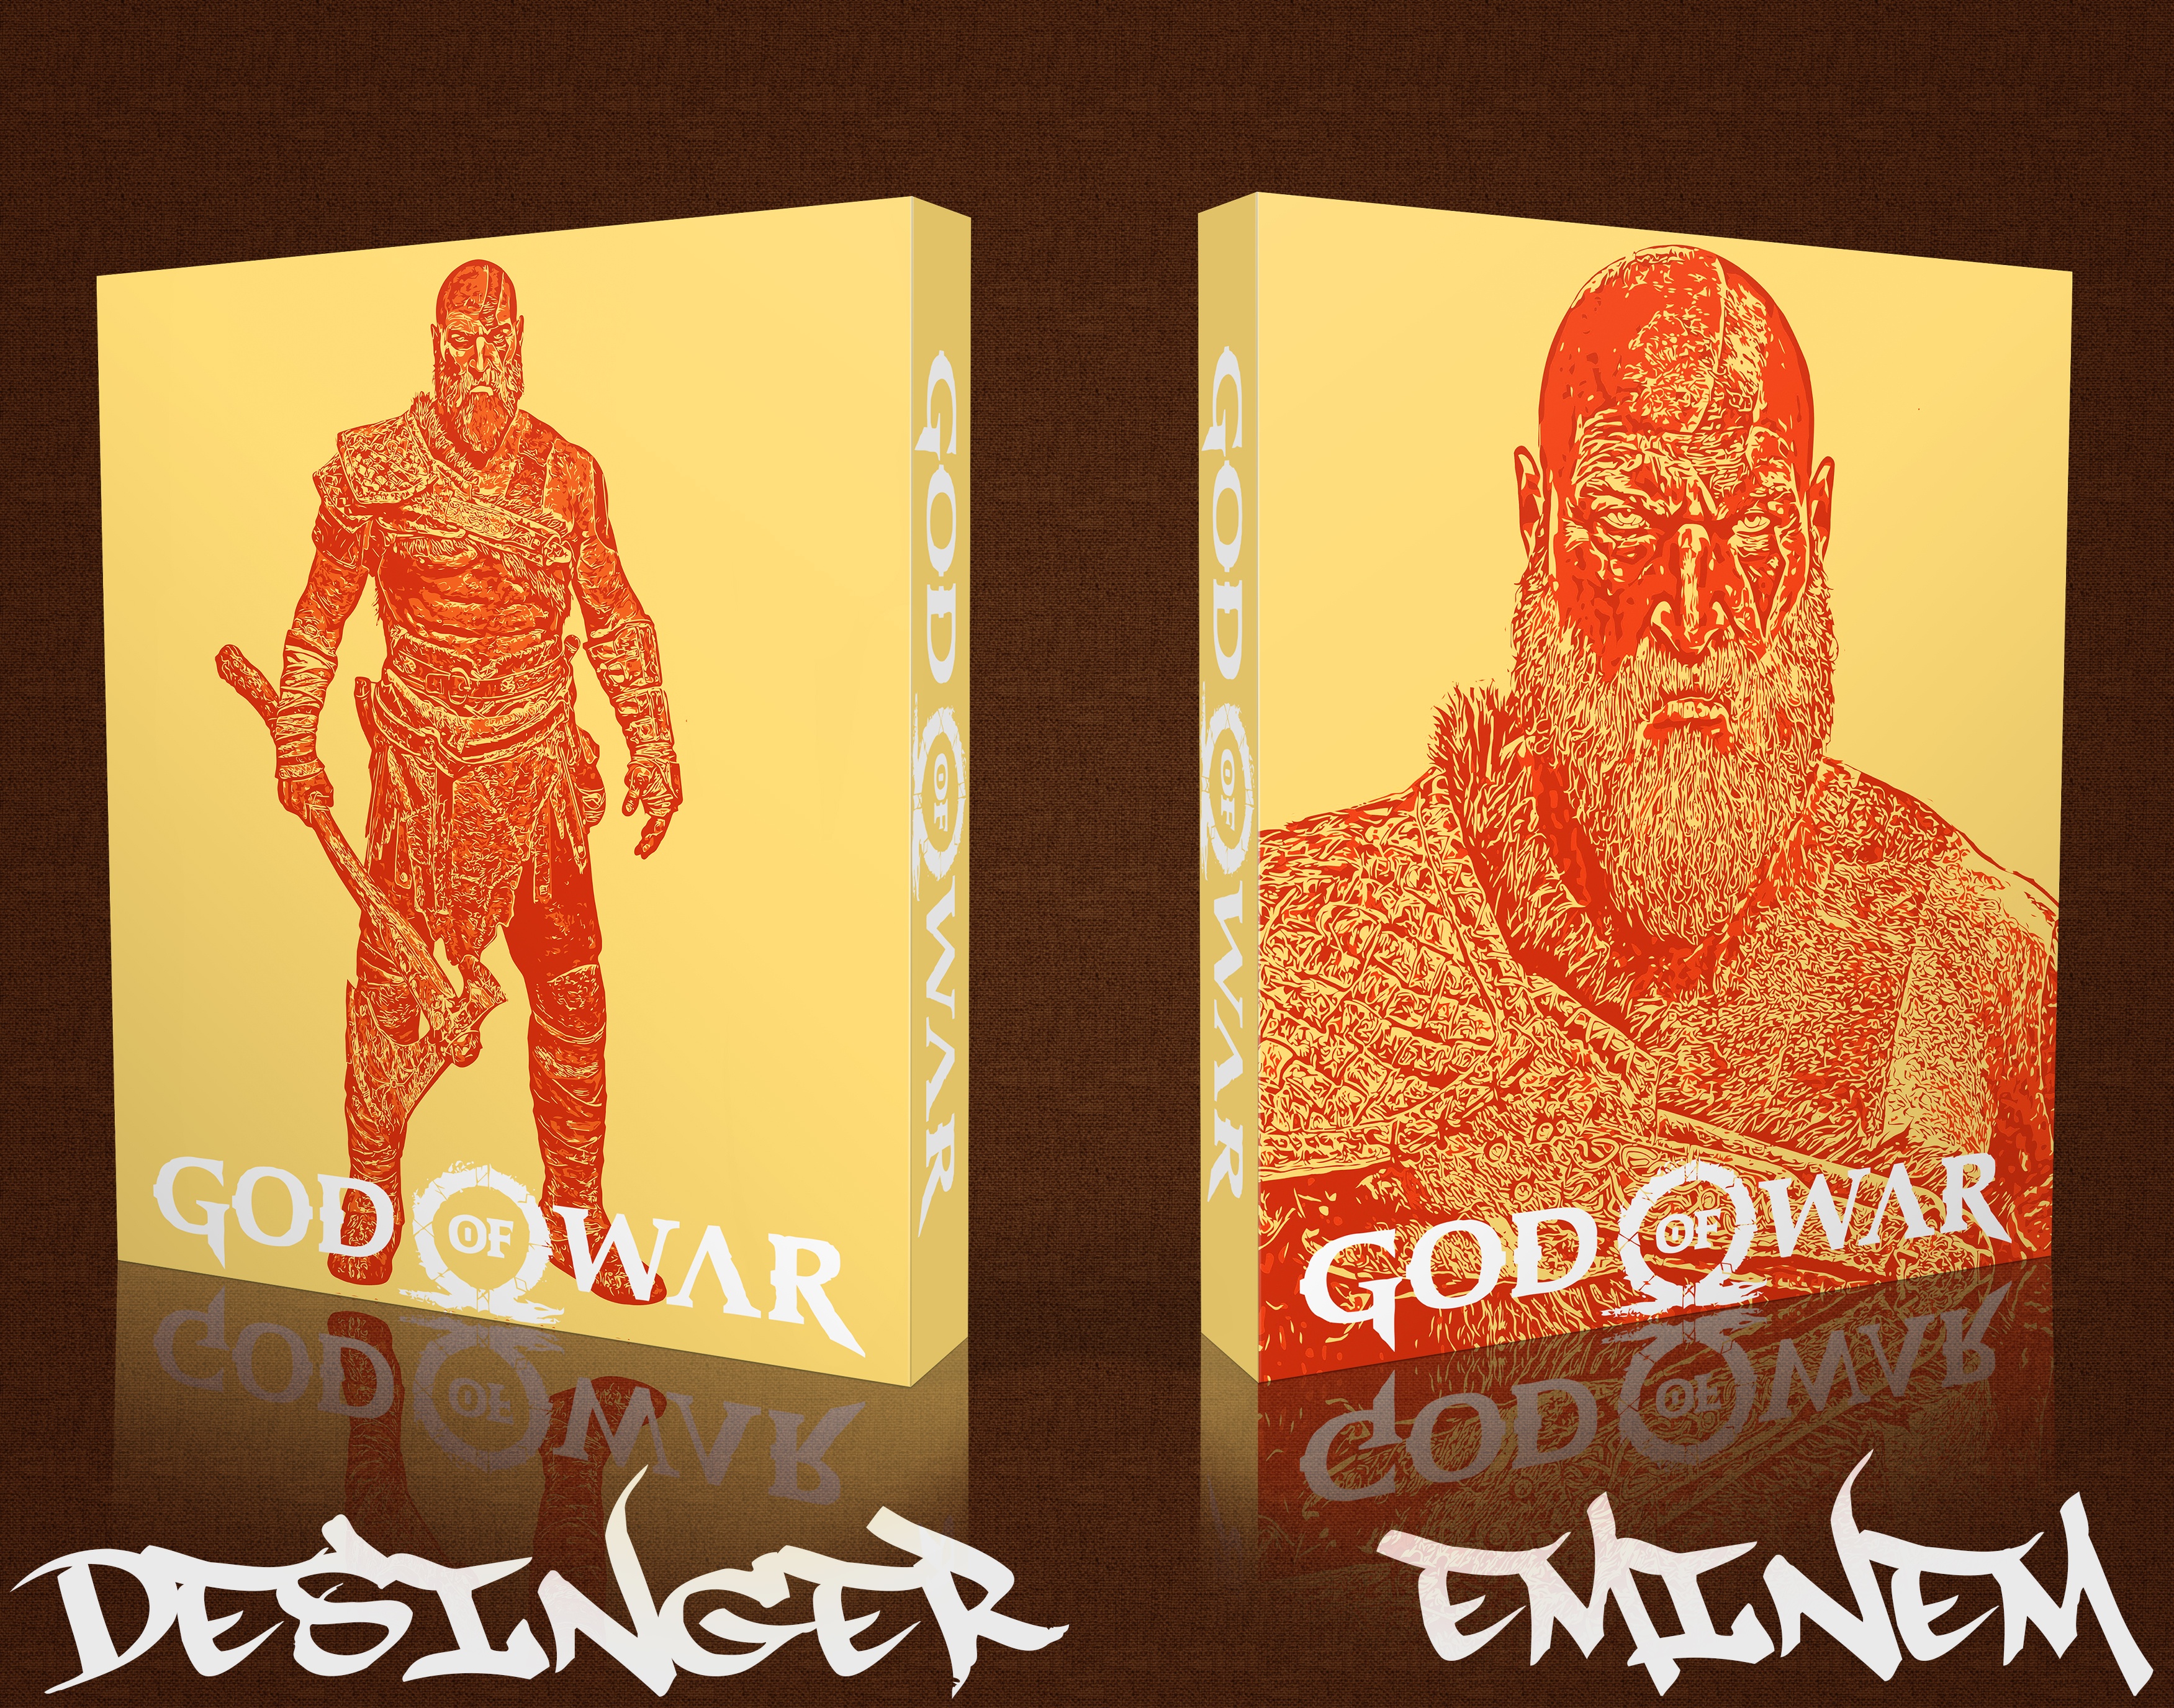 God of War (PS4) box cover